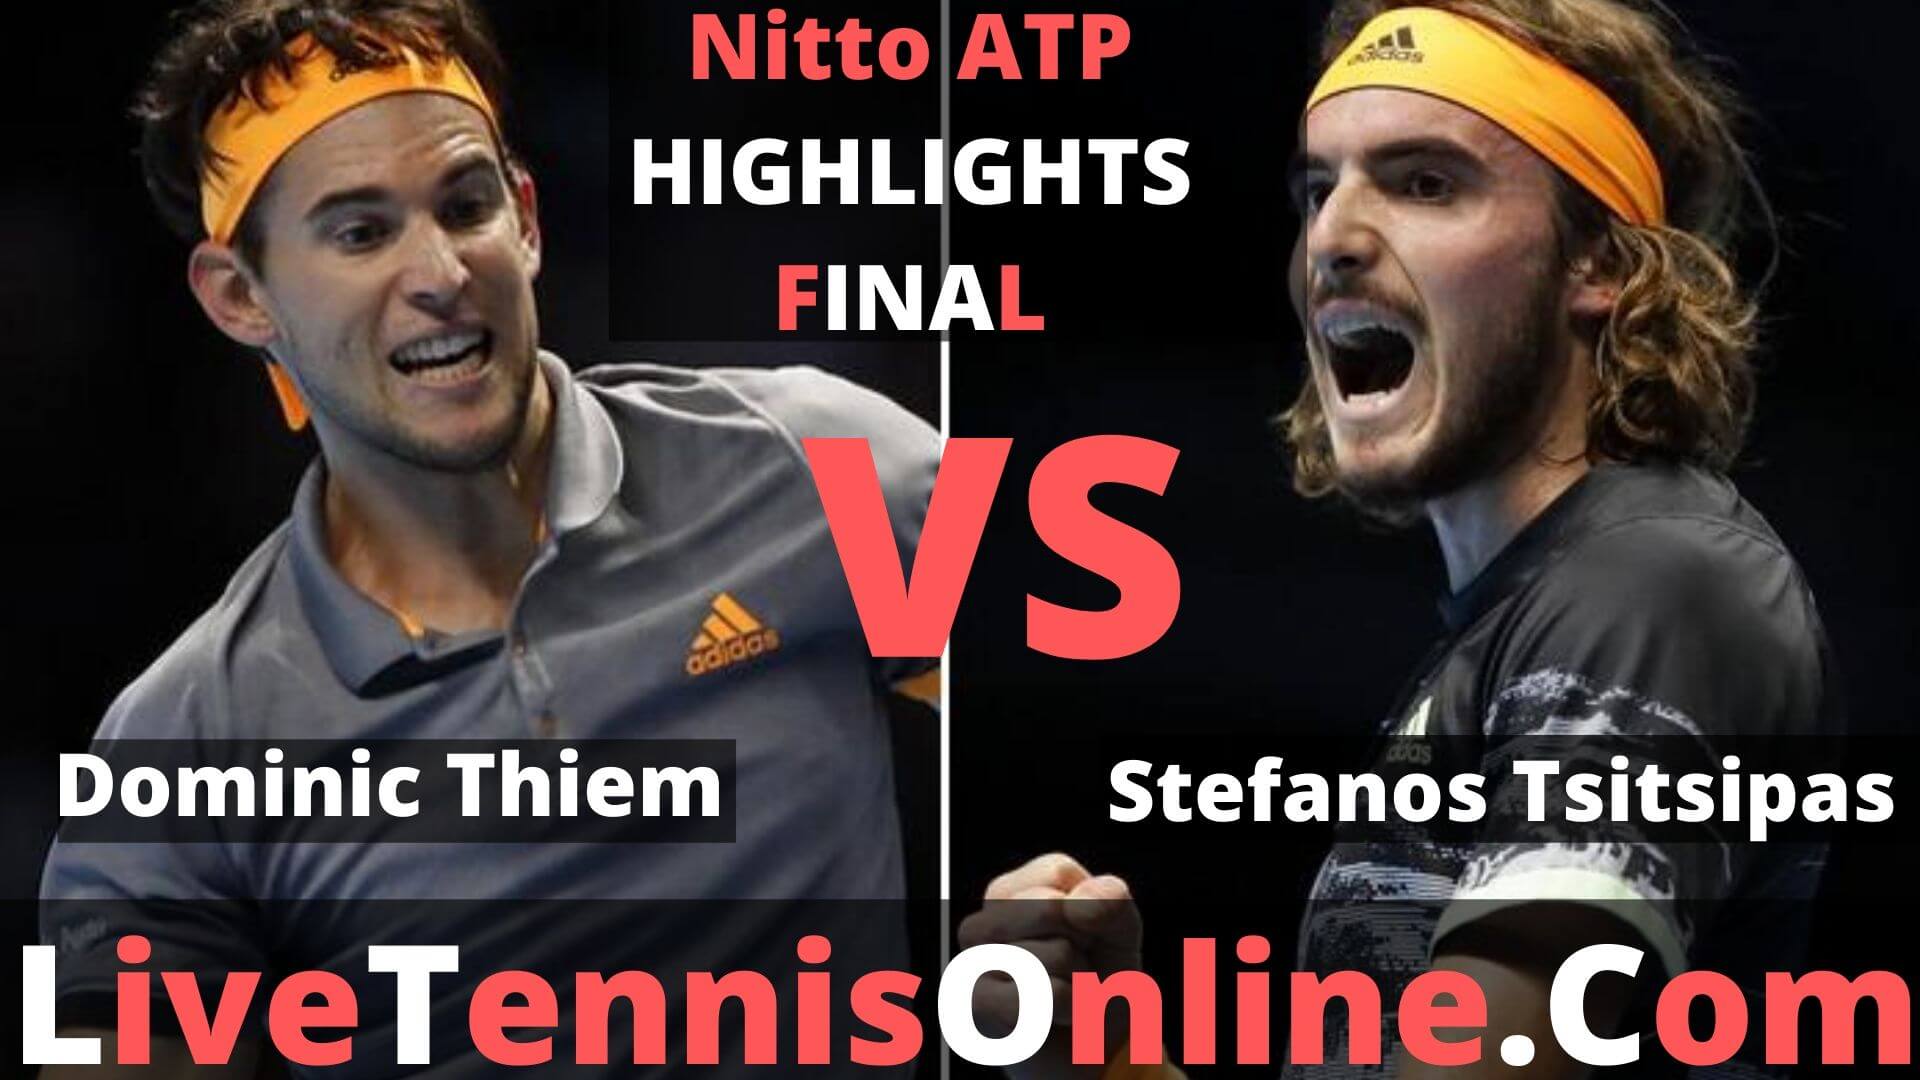 Stefanos Tsitsipas  Vs Dominic Thiem Highlights 2019 Nitto ATP Final